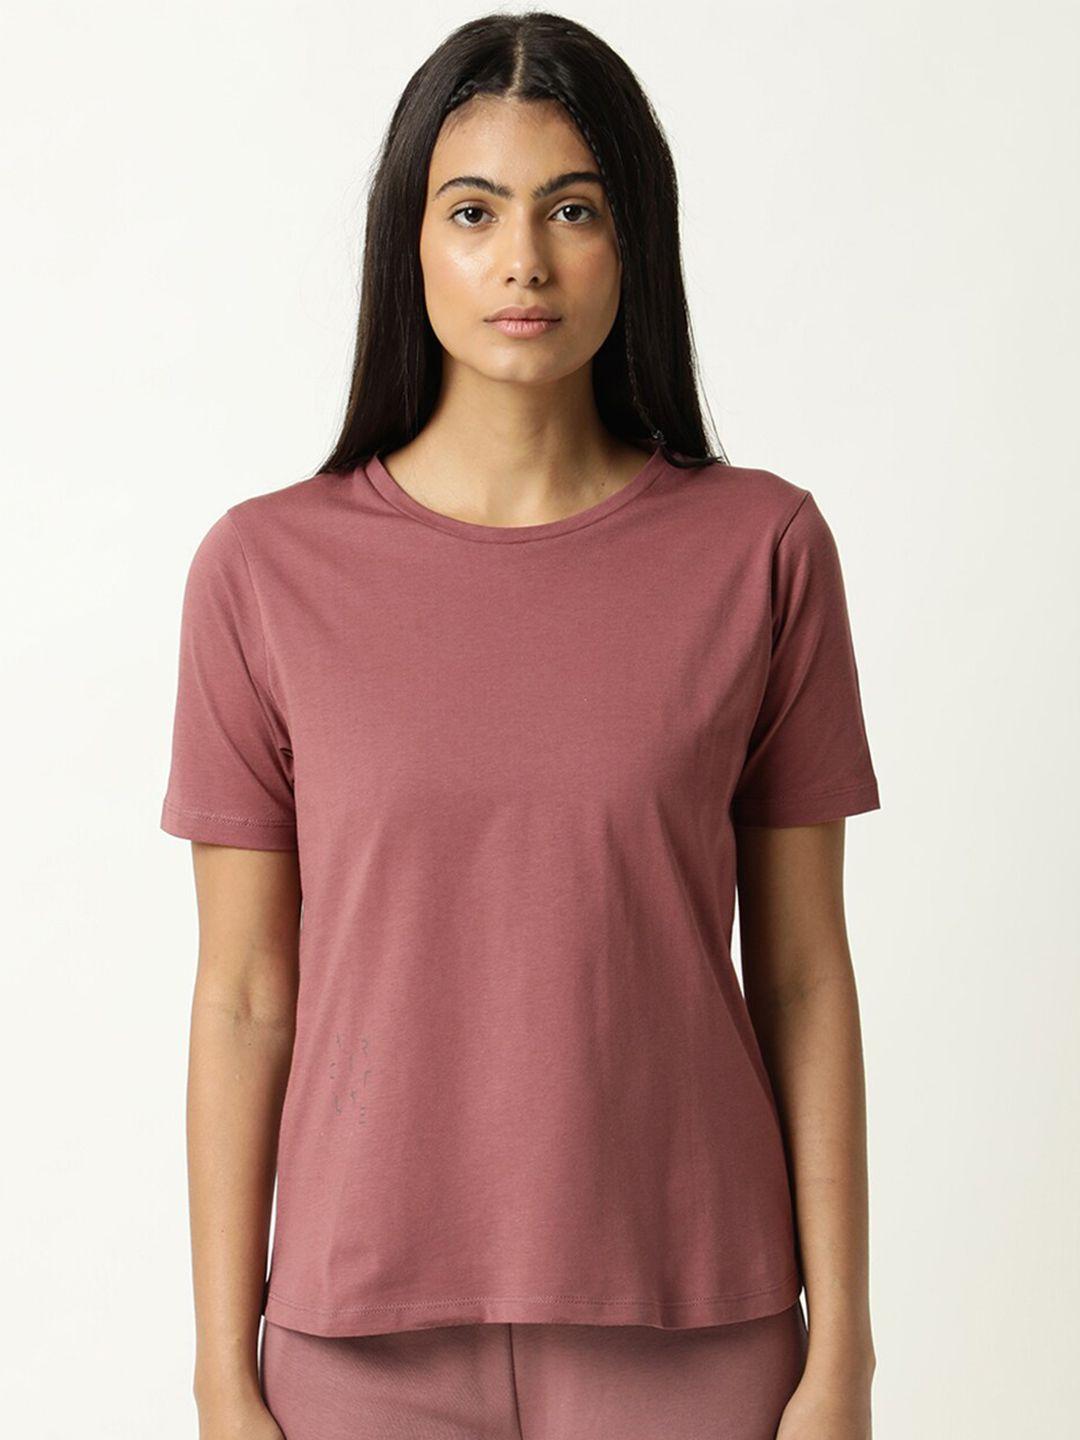 articale women pink solid slim fit cotton t-shirt